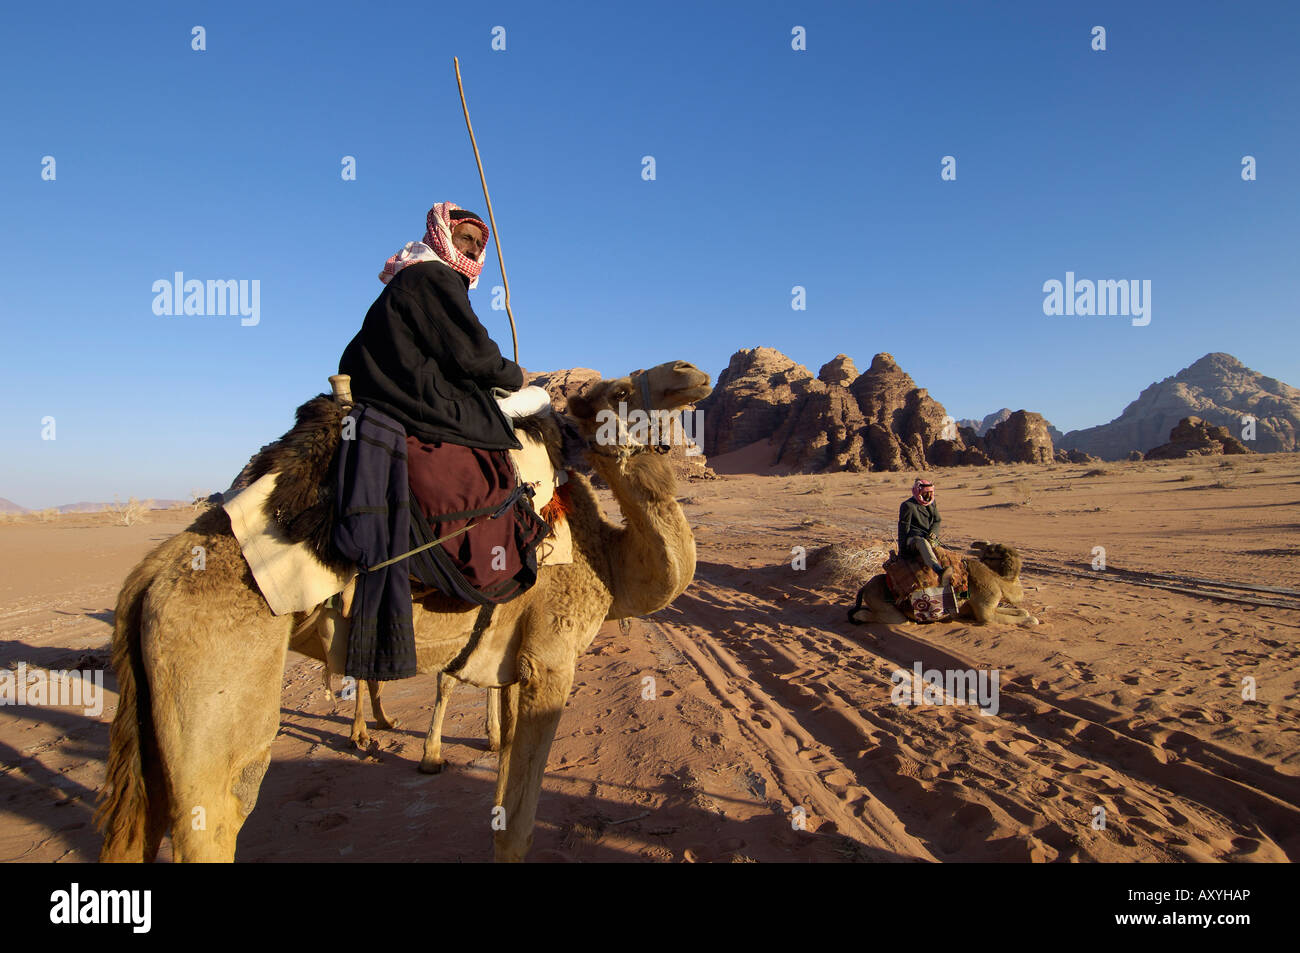 Bedouin on camels in the desert, Wadi Rum, Jordan, Middle East Stock Photo